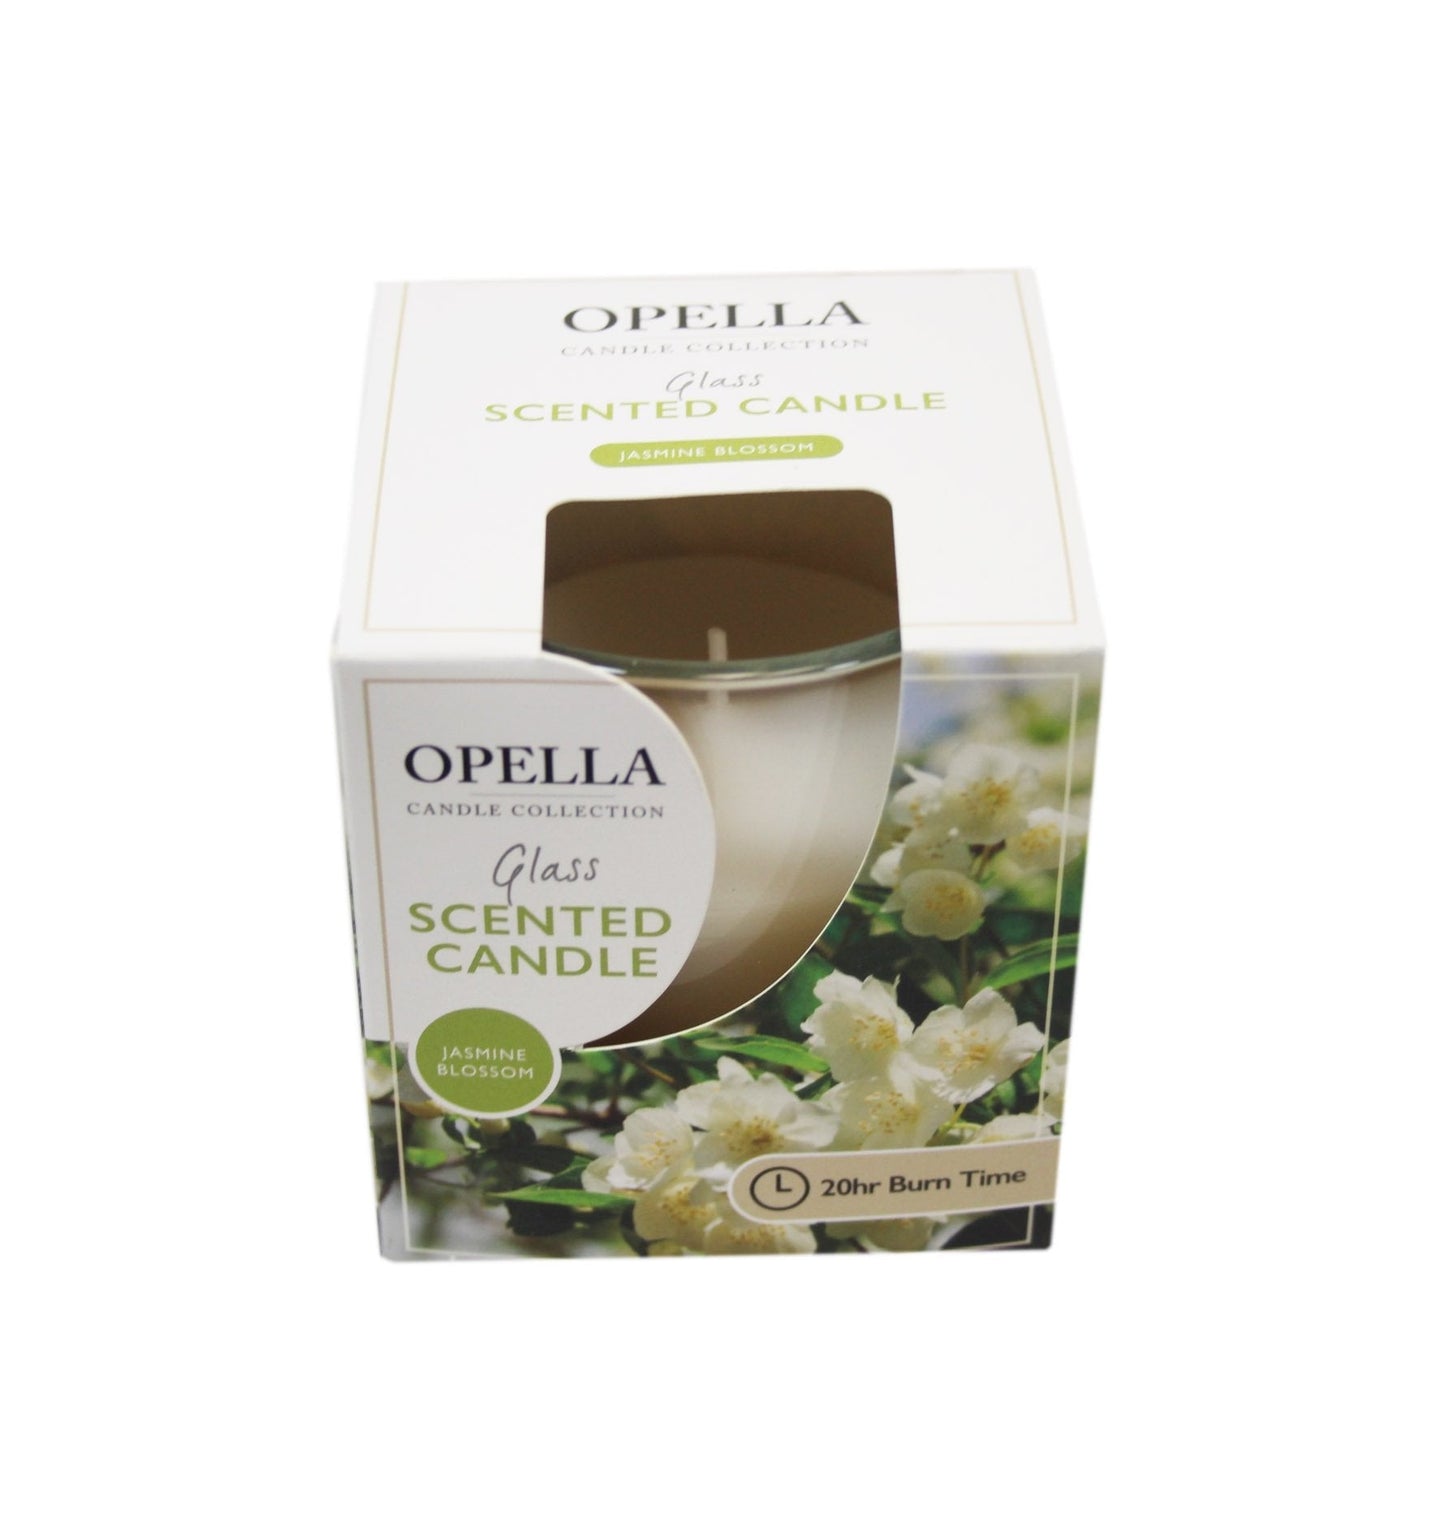 Opella Scented Candle In Glass Jar Jasmine Blossom Fragrance 8 x 7cm CDJARJ (Parcel Rate)